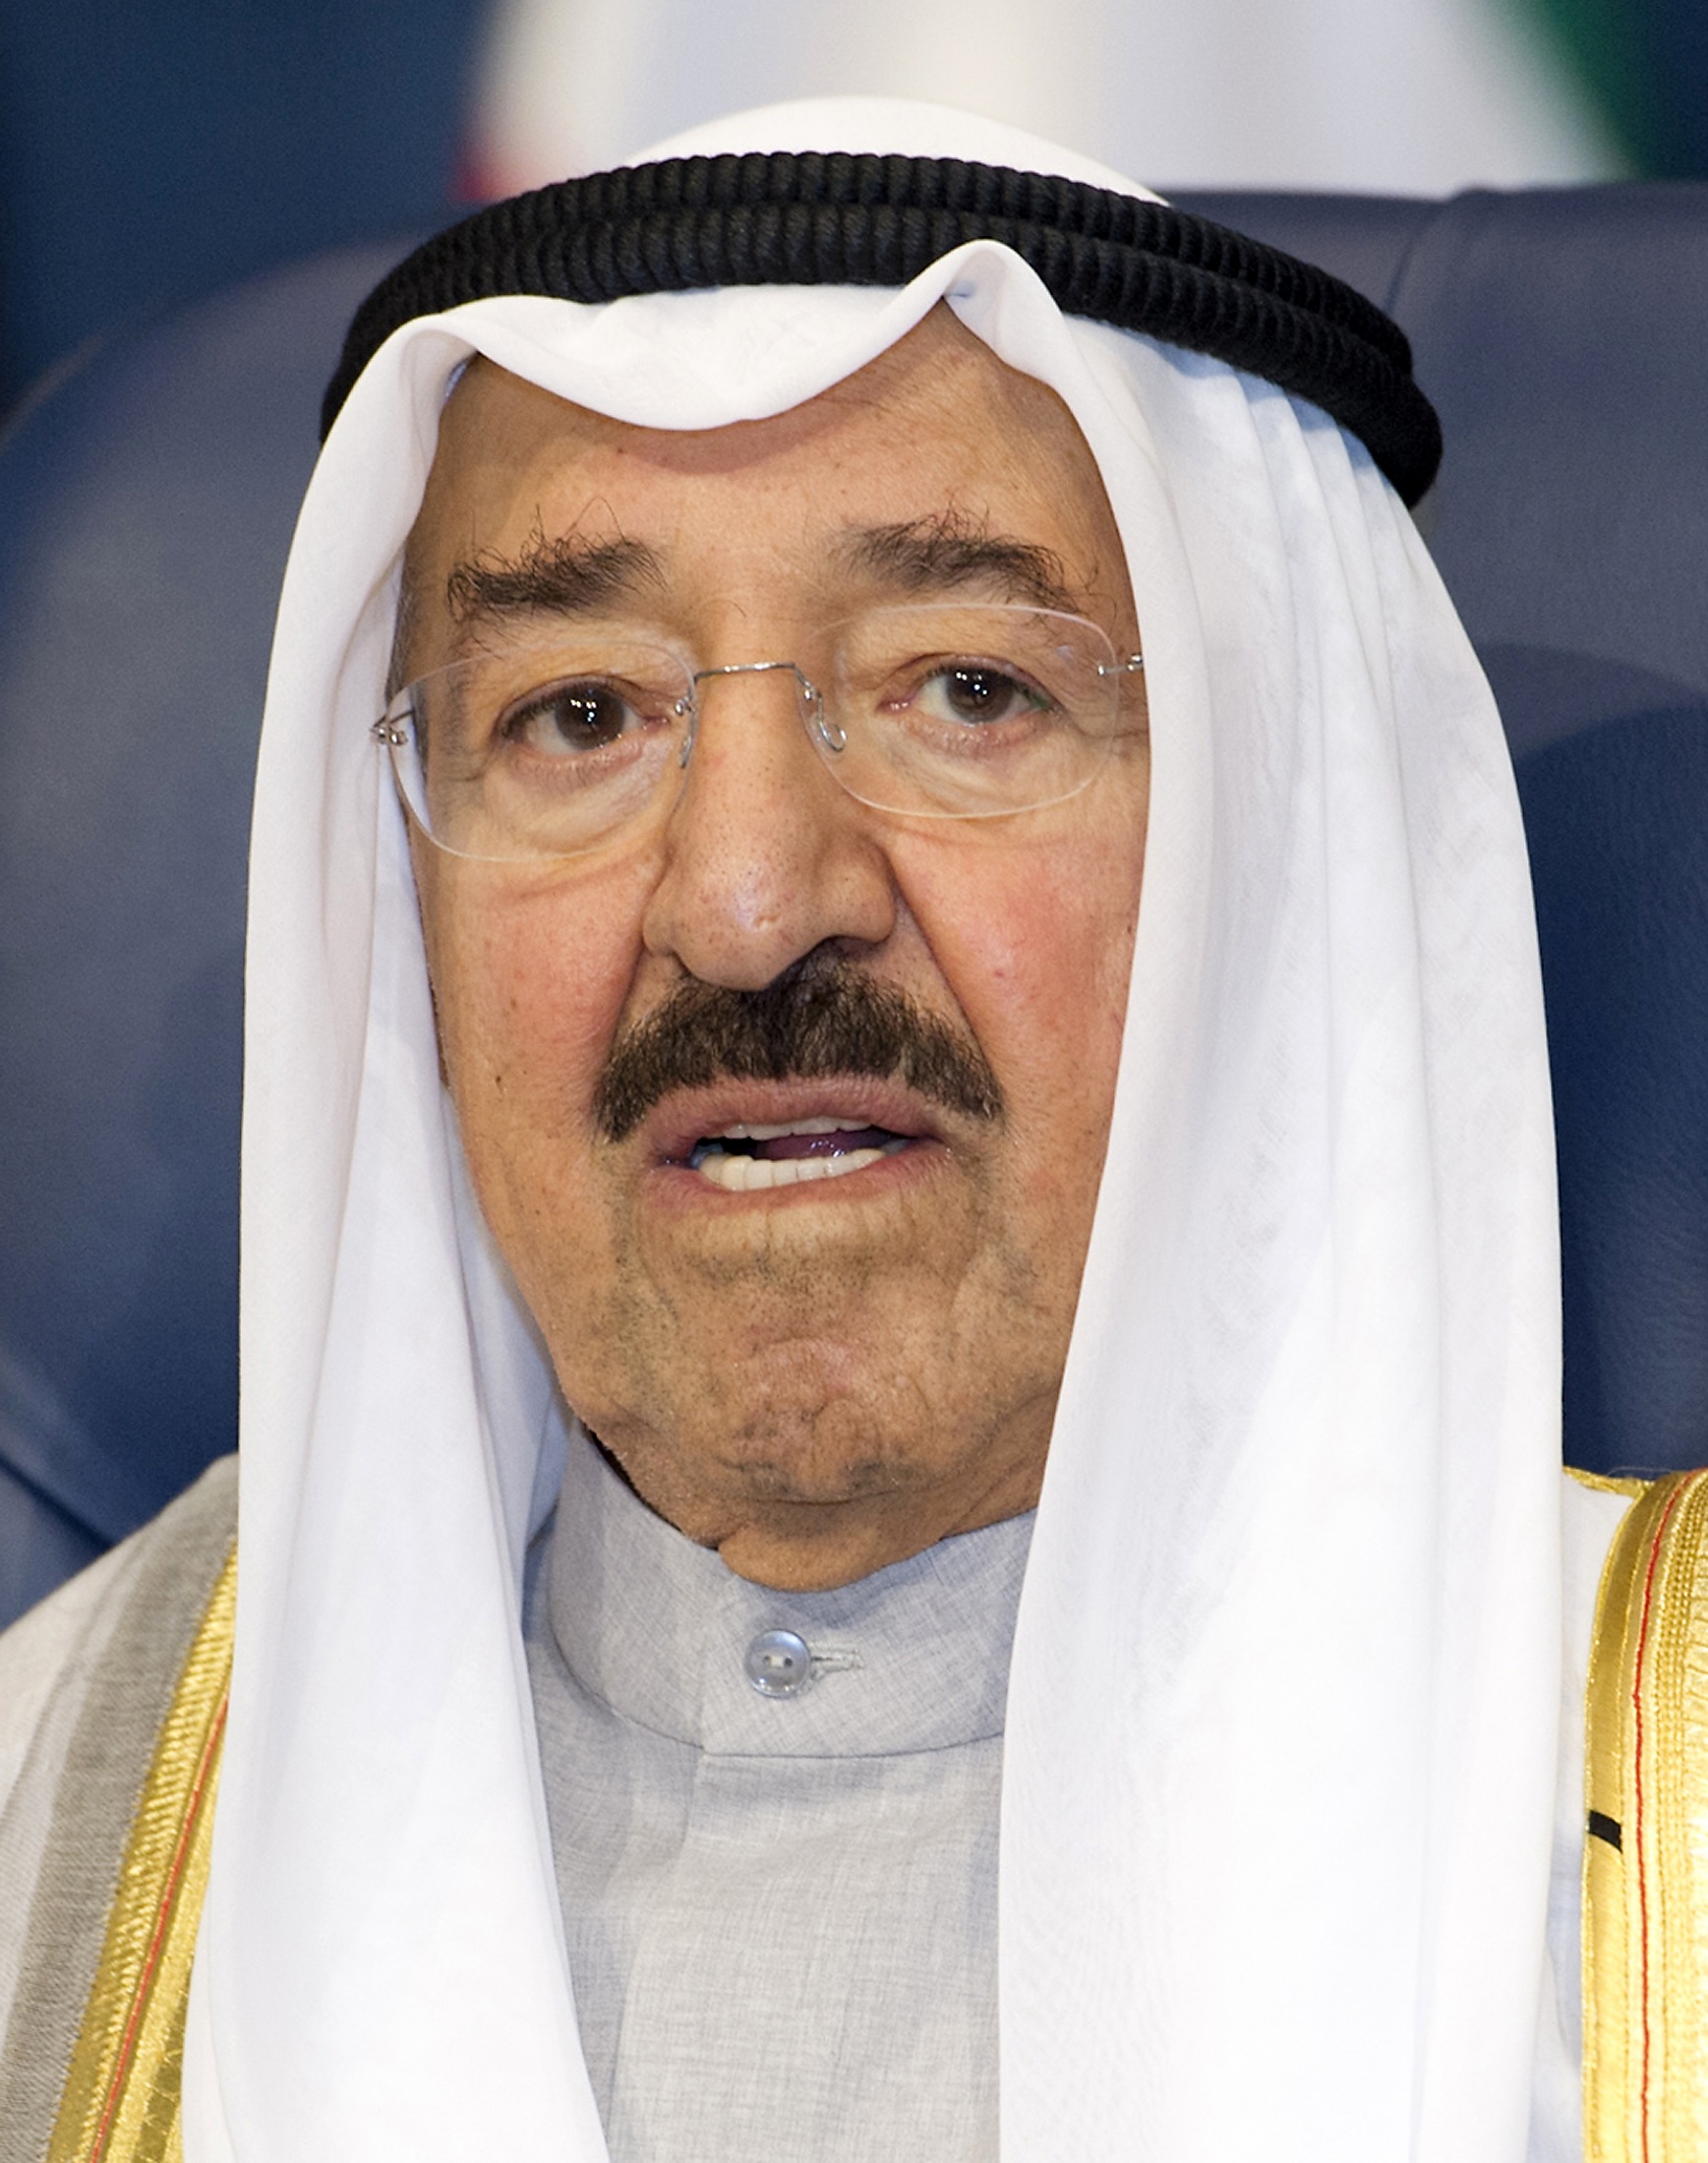 His Highness the Amir Sheikh Sabah Al-Ahmad Al-Jaber Al-Sabah